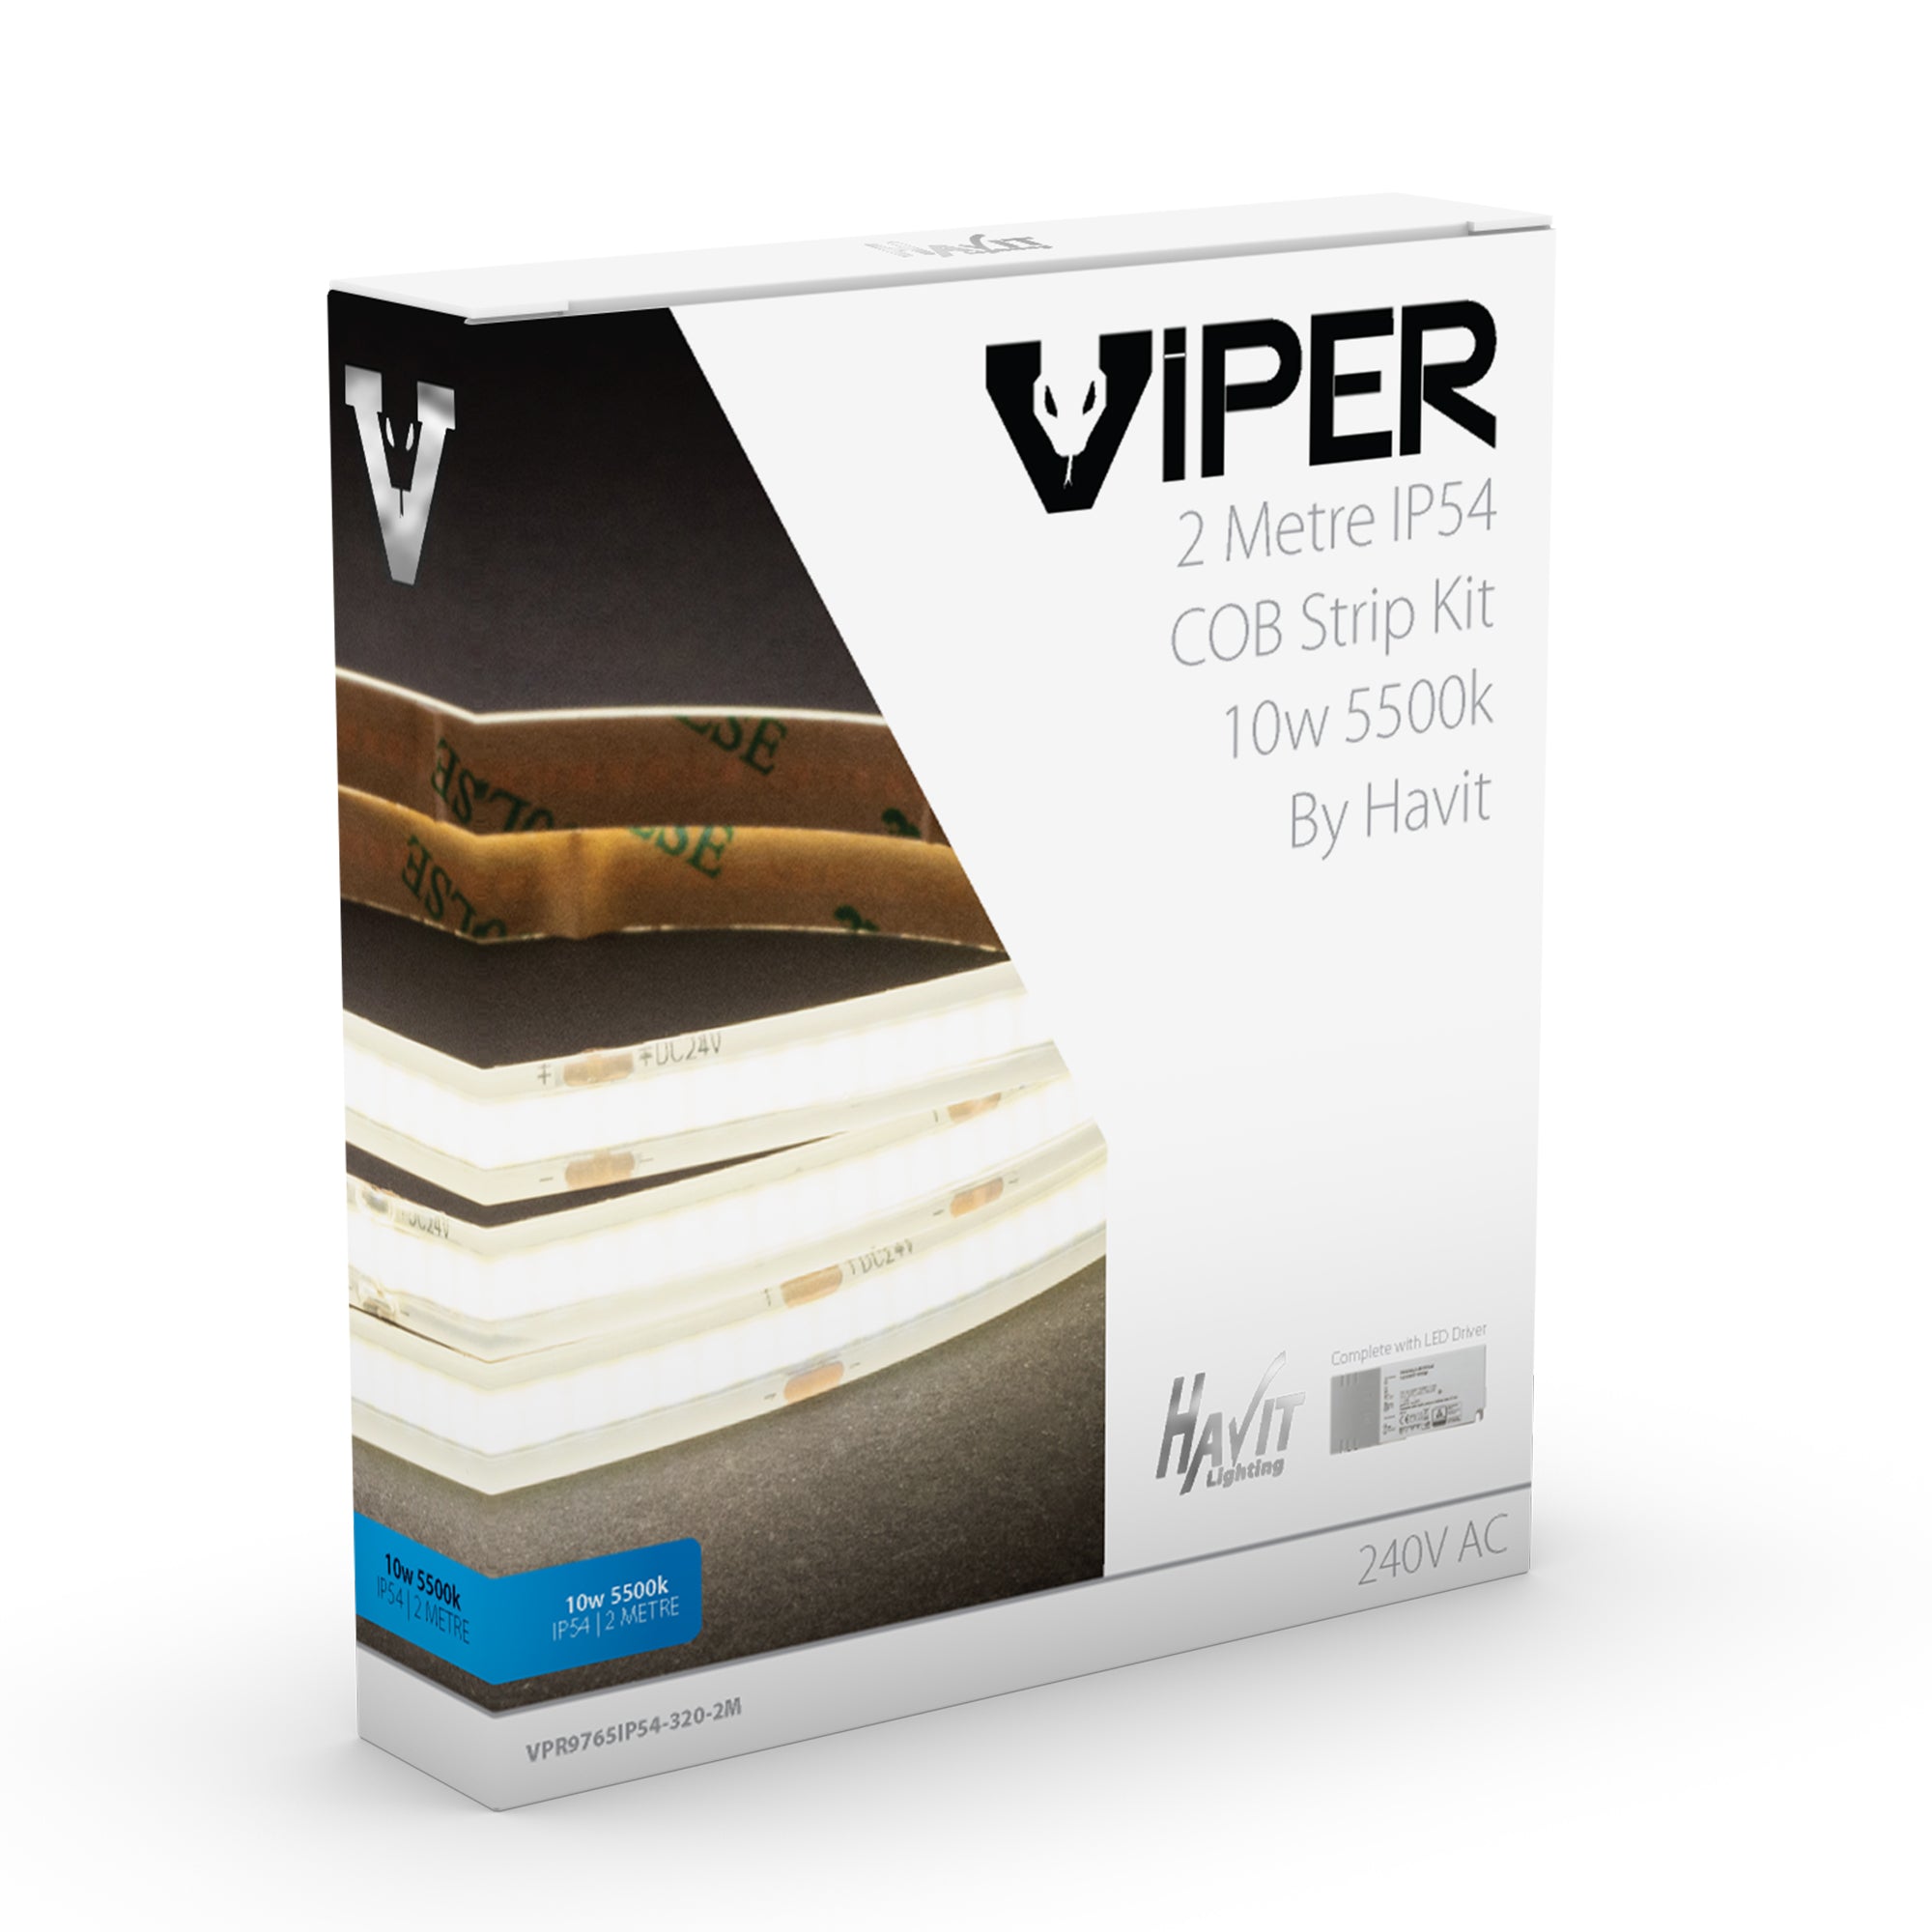 VPR9765IP54-320-2M - Viper COB 10w Per Metre 2m LED Strip kit 5500k